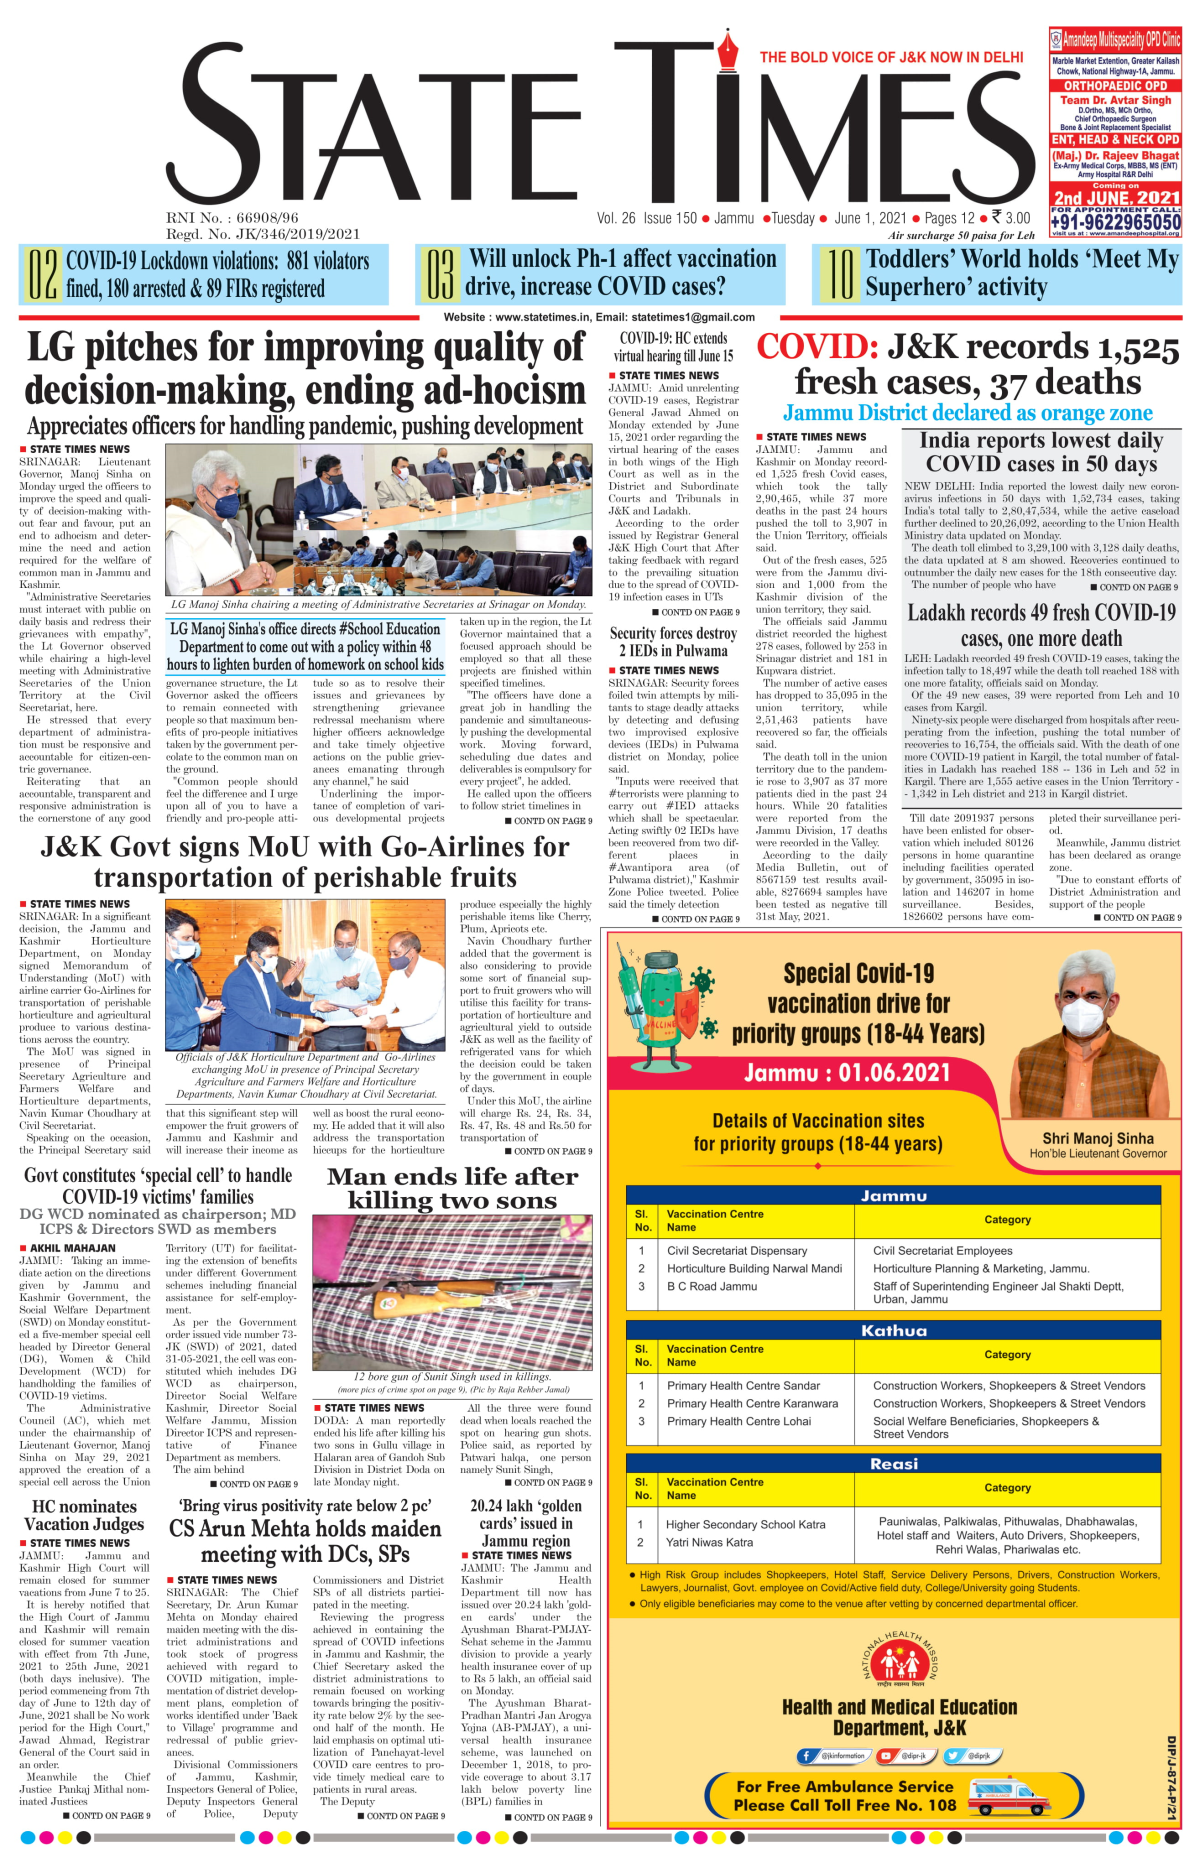 State Times Epaper Newspaper Jammu News Paper Newspaper In English Kashmir English Newspaper Statetimes